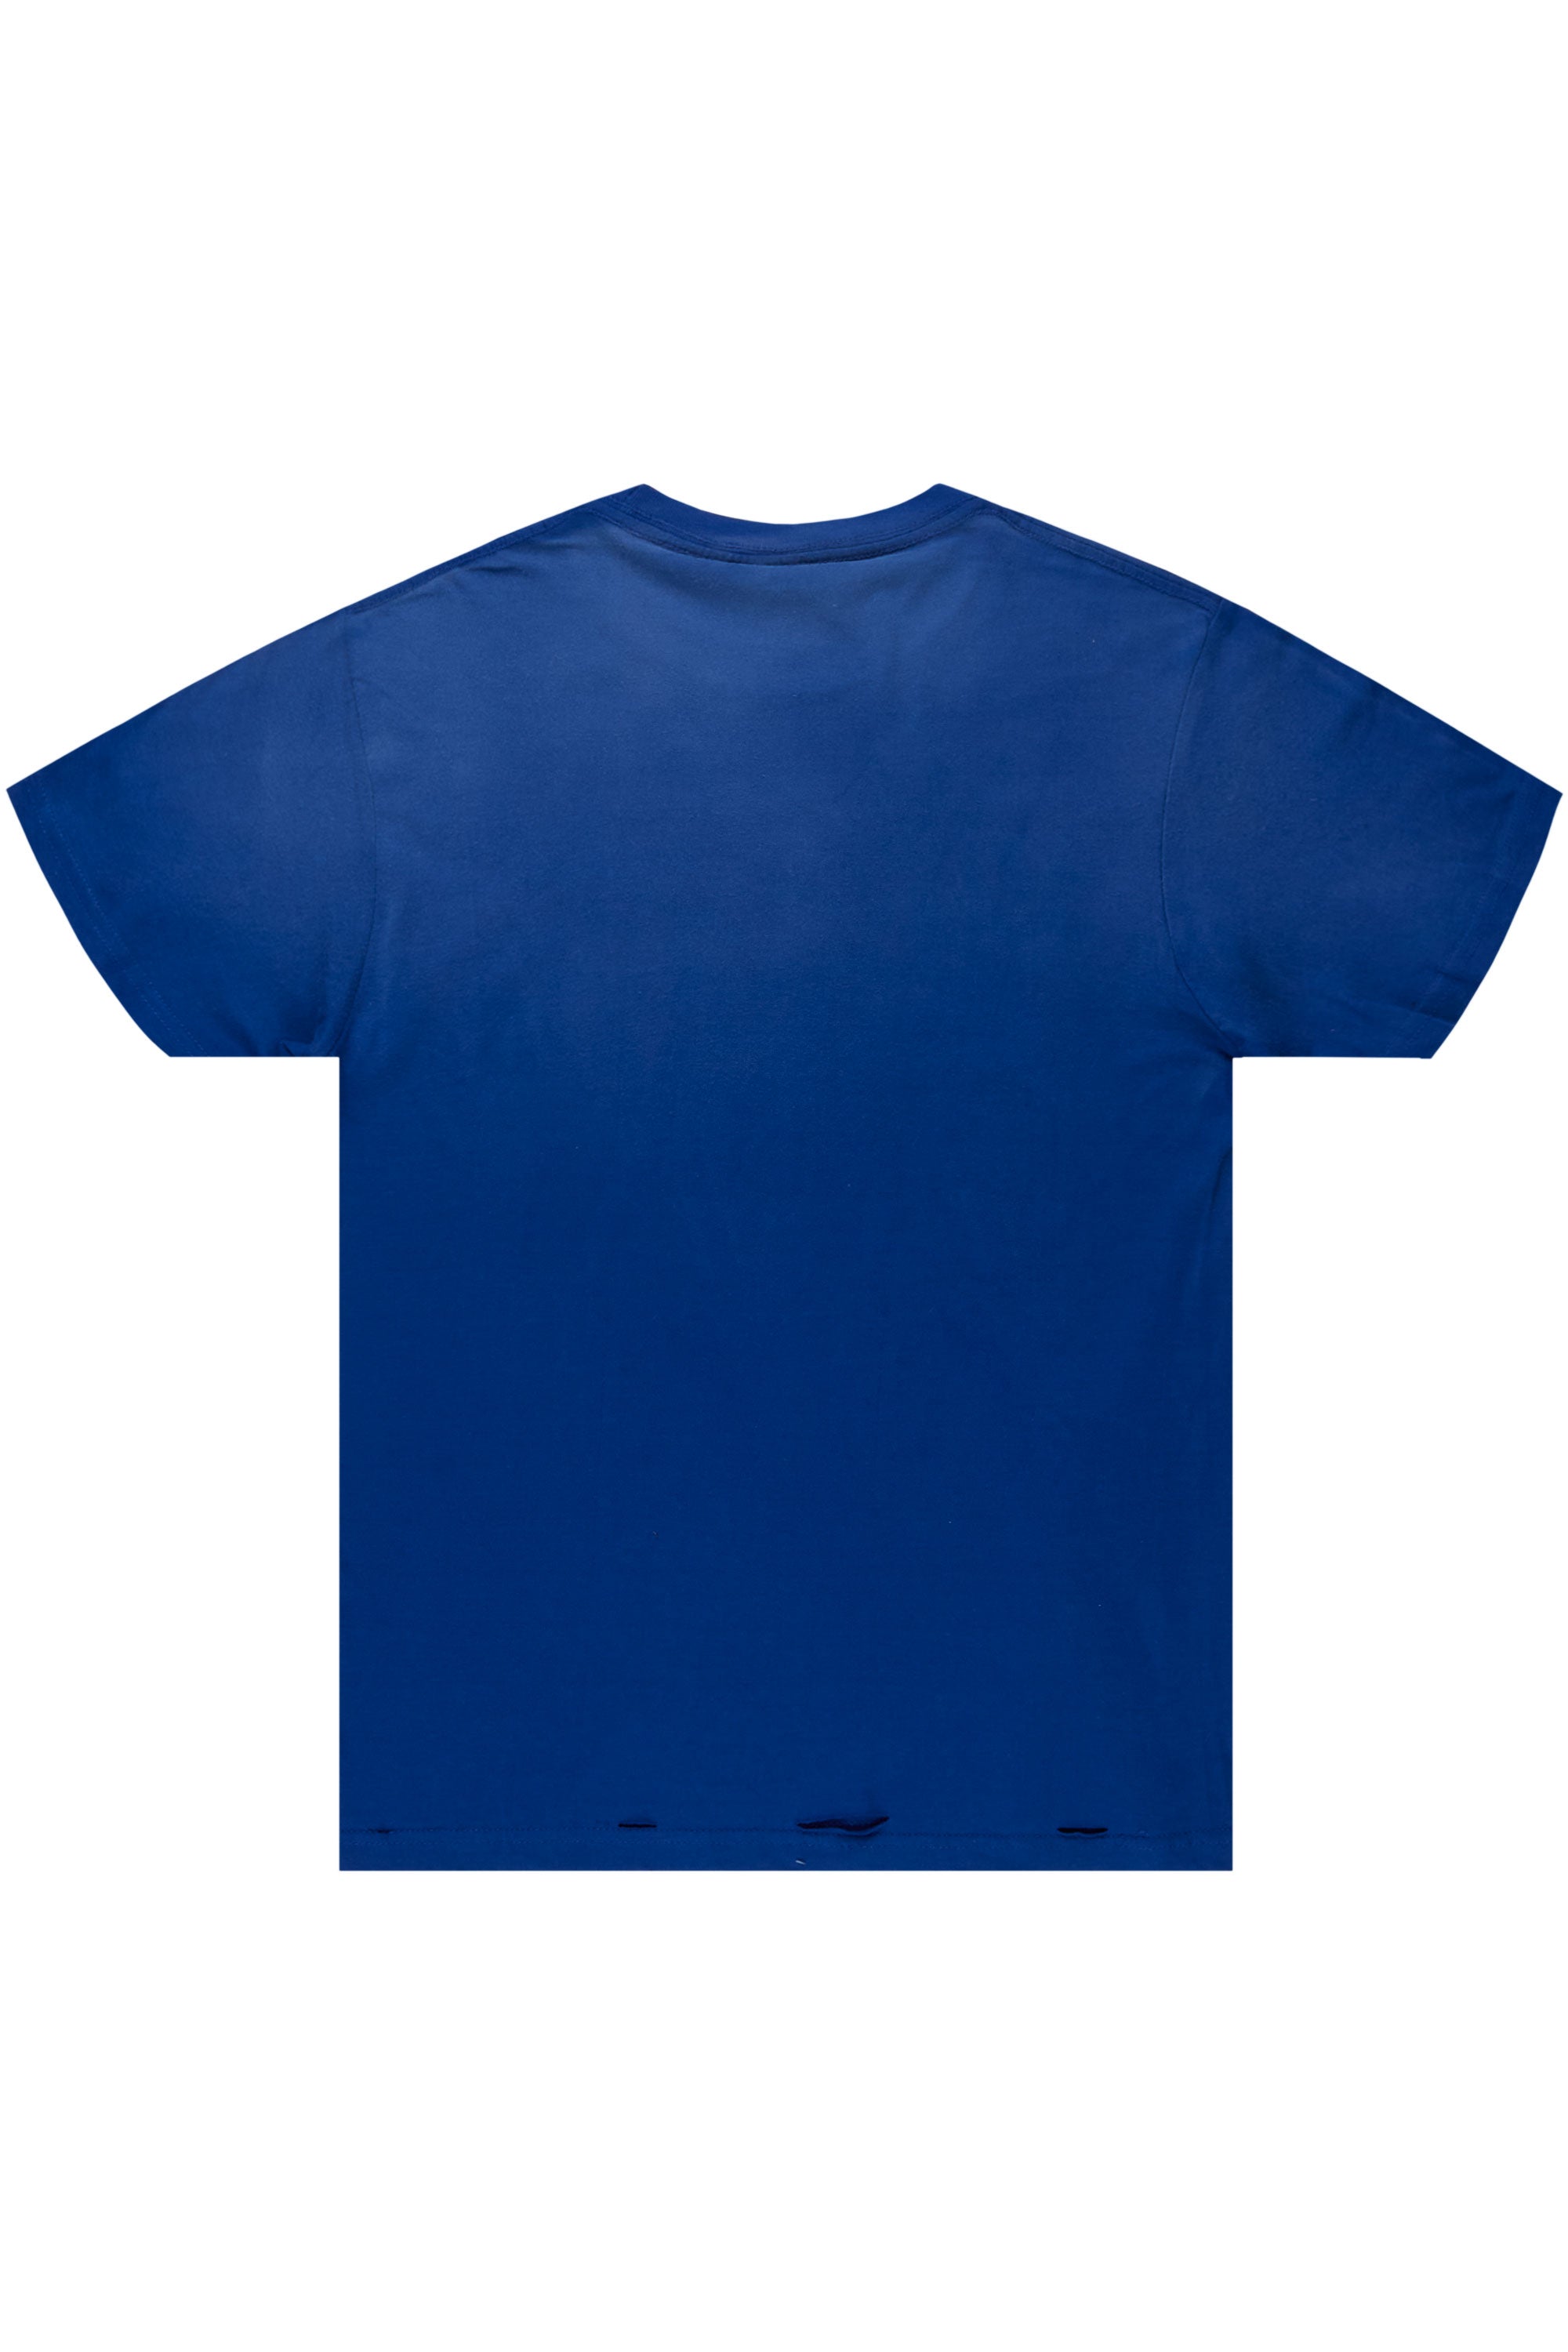 Peele Royal Blue Graphic T-Shirt